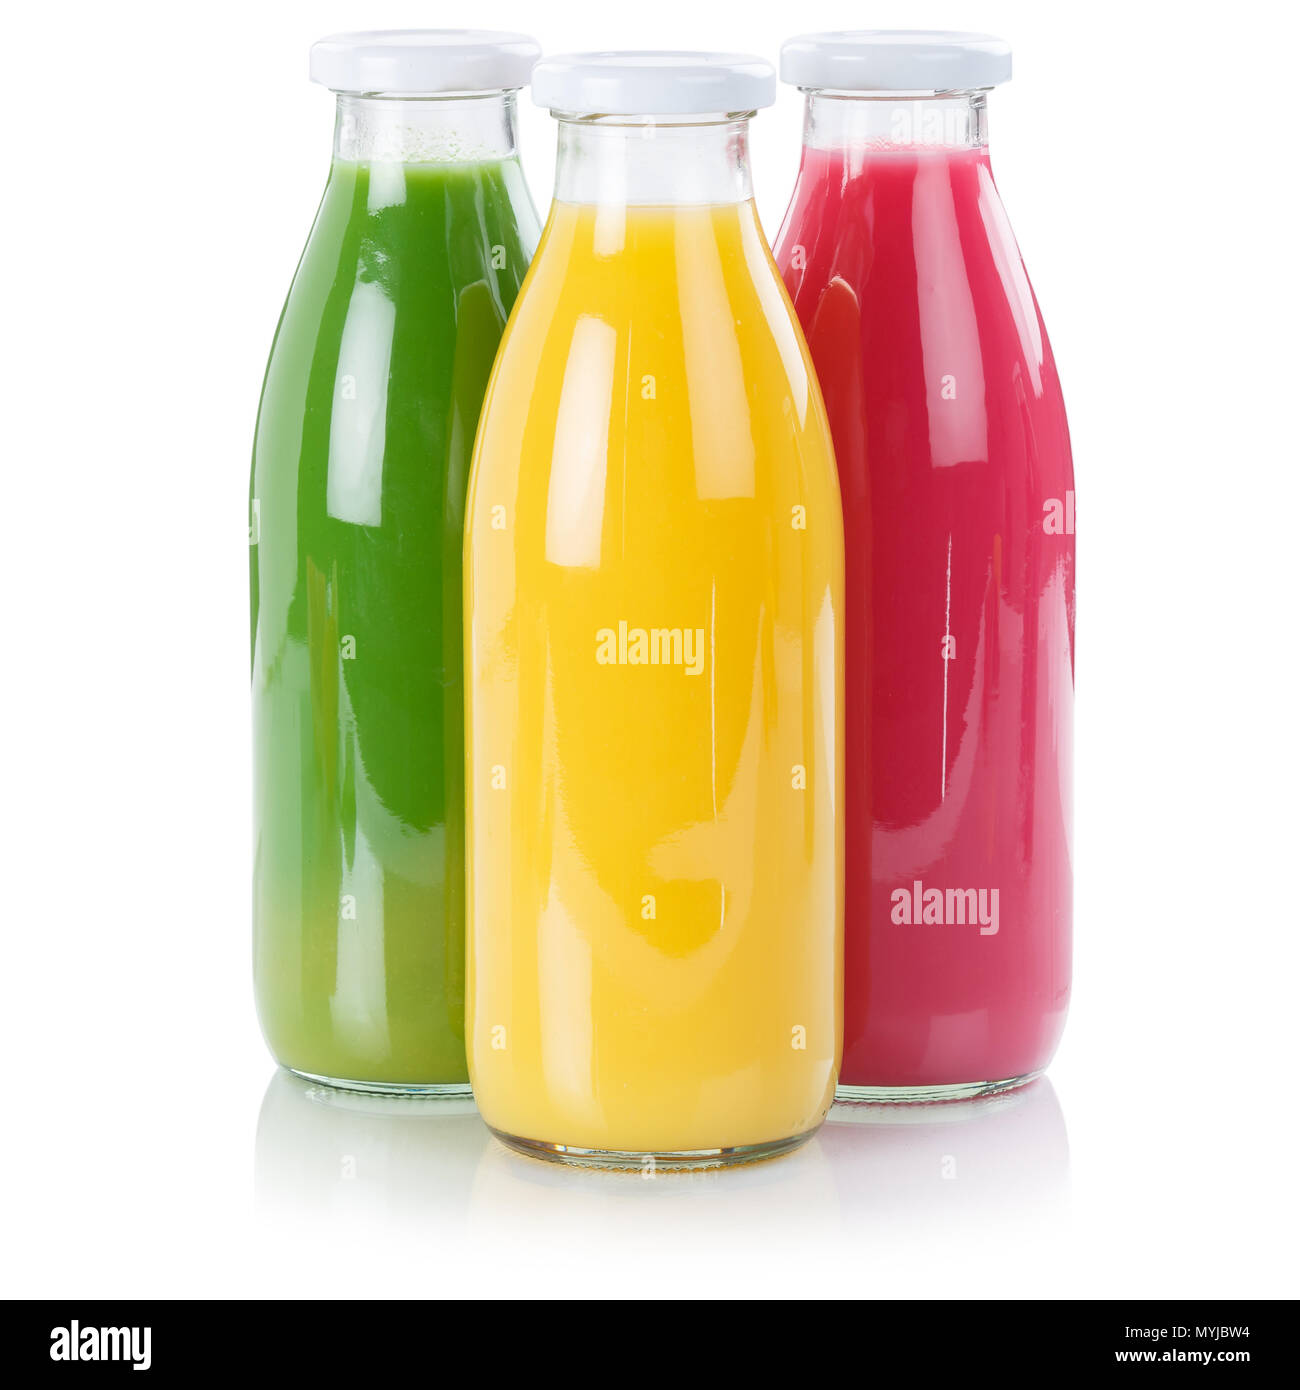 https://c8.alamy.com/comp/MYJBW4/juice-smoothie-orange-smoothies-in-bottle-square-isolated-on-a-white-background-MYJBW4.jpg